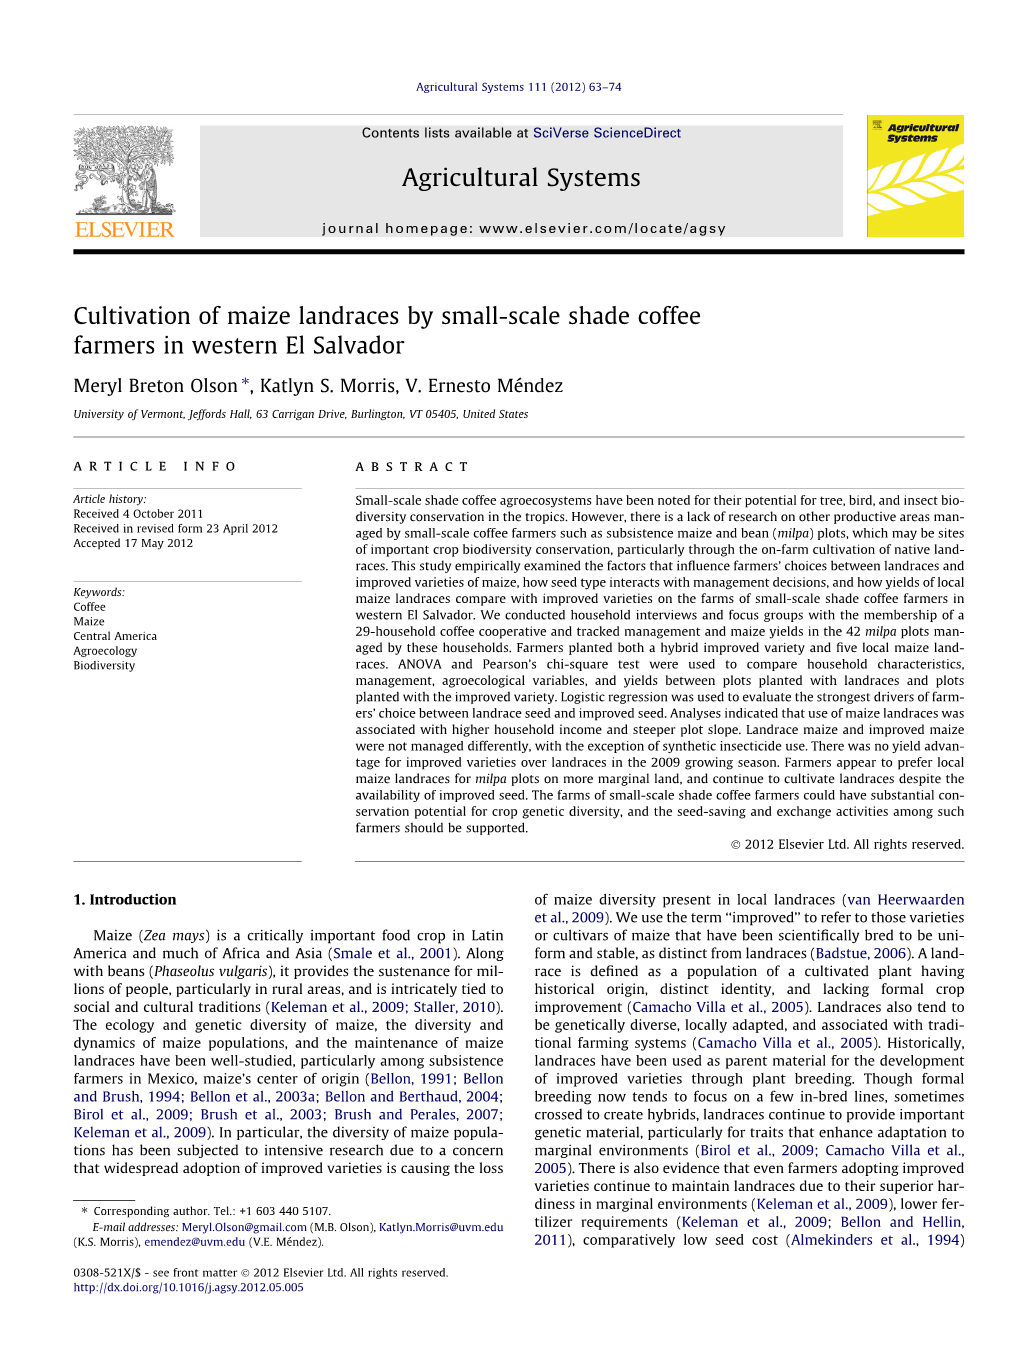 Cultivation of Maize Landraces by Small-Scale Shade Coffee Farmers in Western El Salvador ⇑ Meryl Breton Olson , Katlyn S